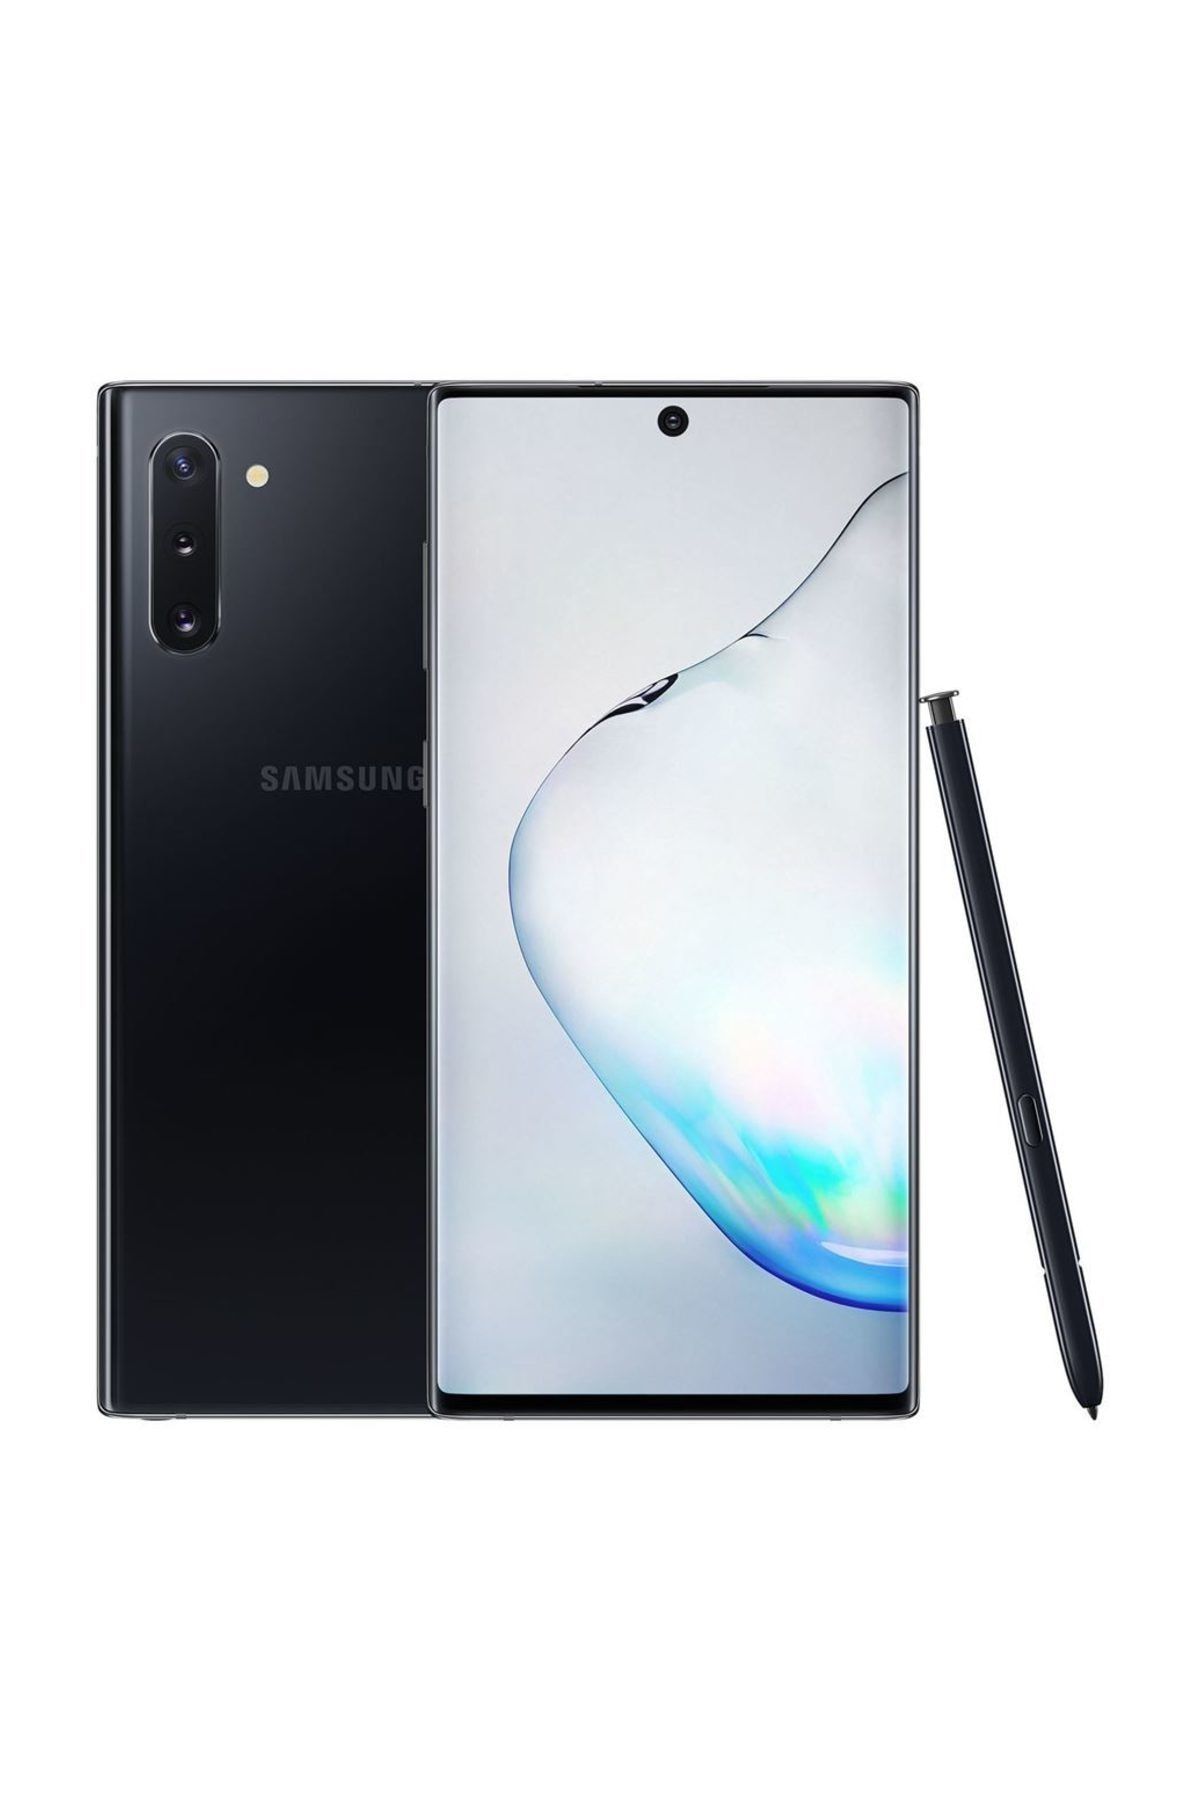 Samsung Galaxy Note 10 256 GB Duman Siyahı Cep Telefonu (Samsung Türkiye Garantili)